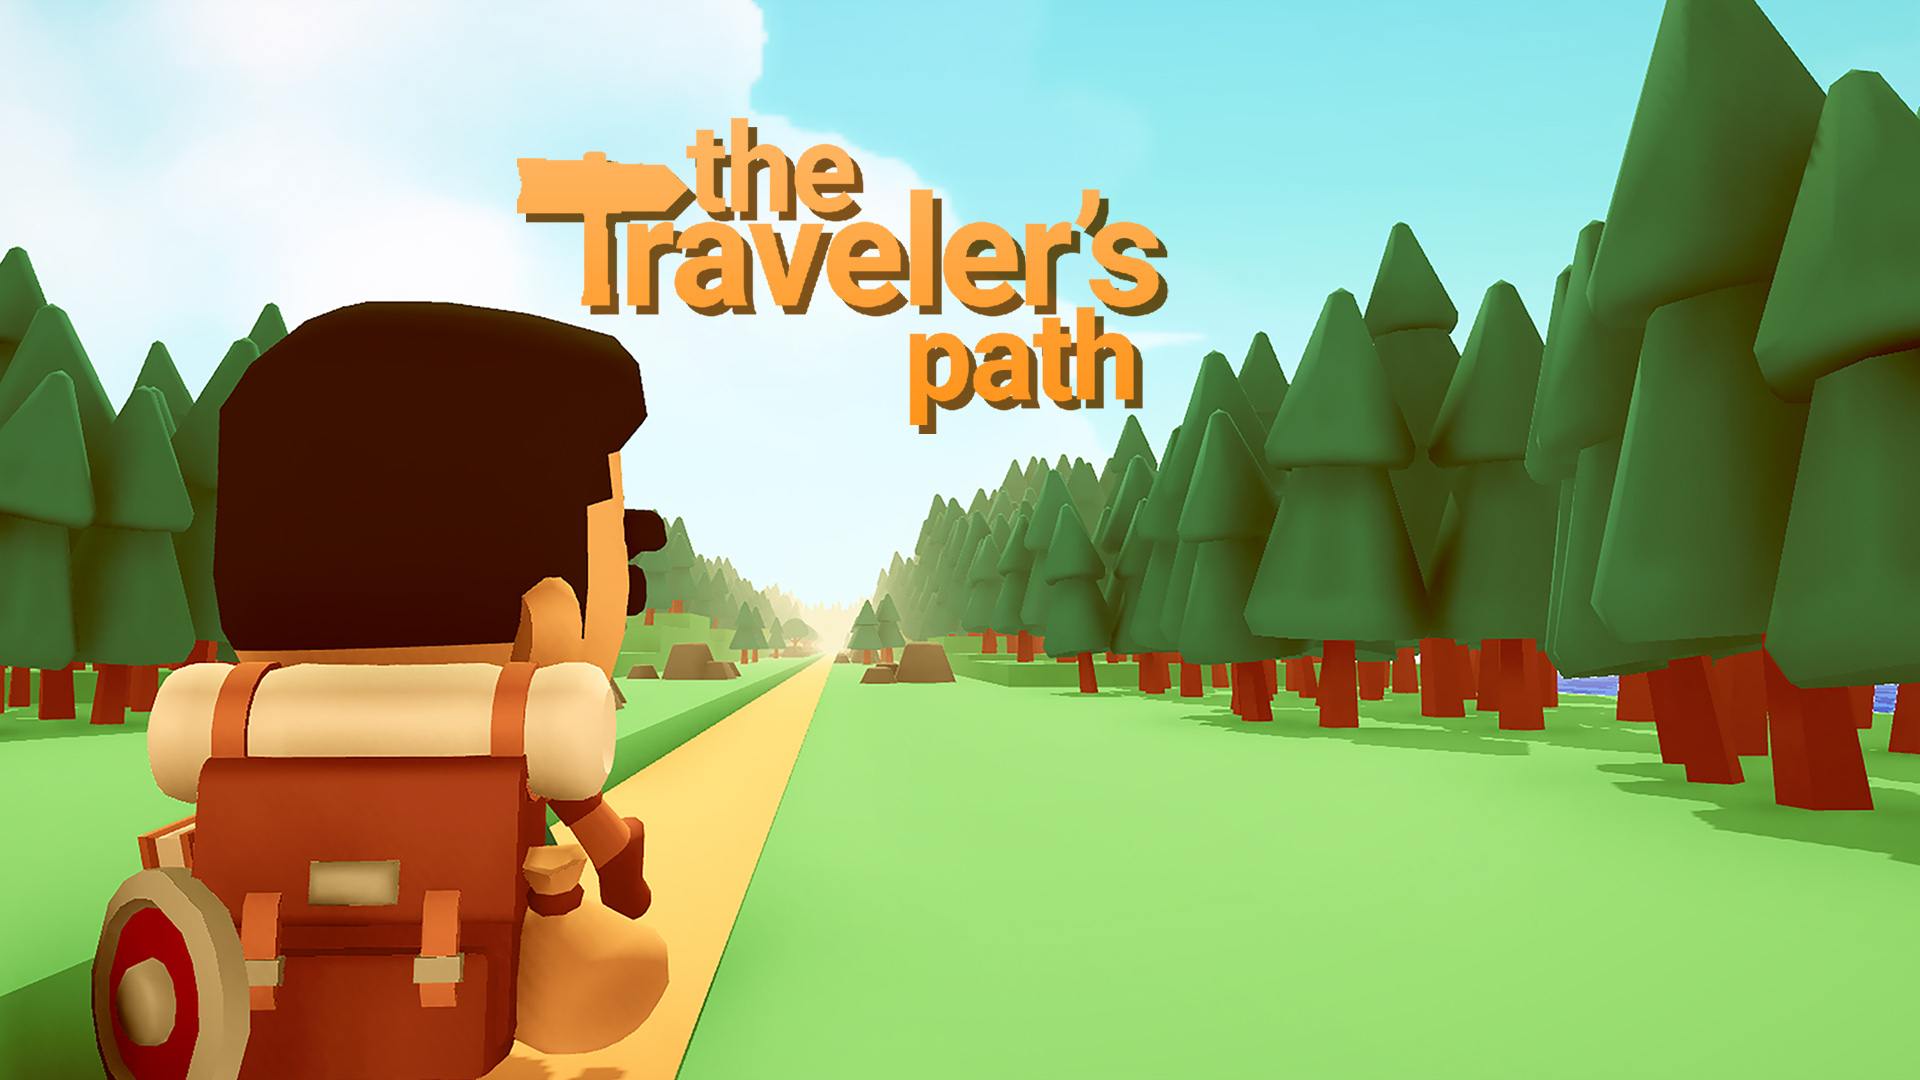 The Traveler's Path